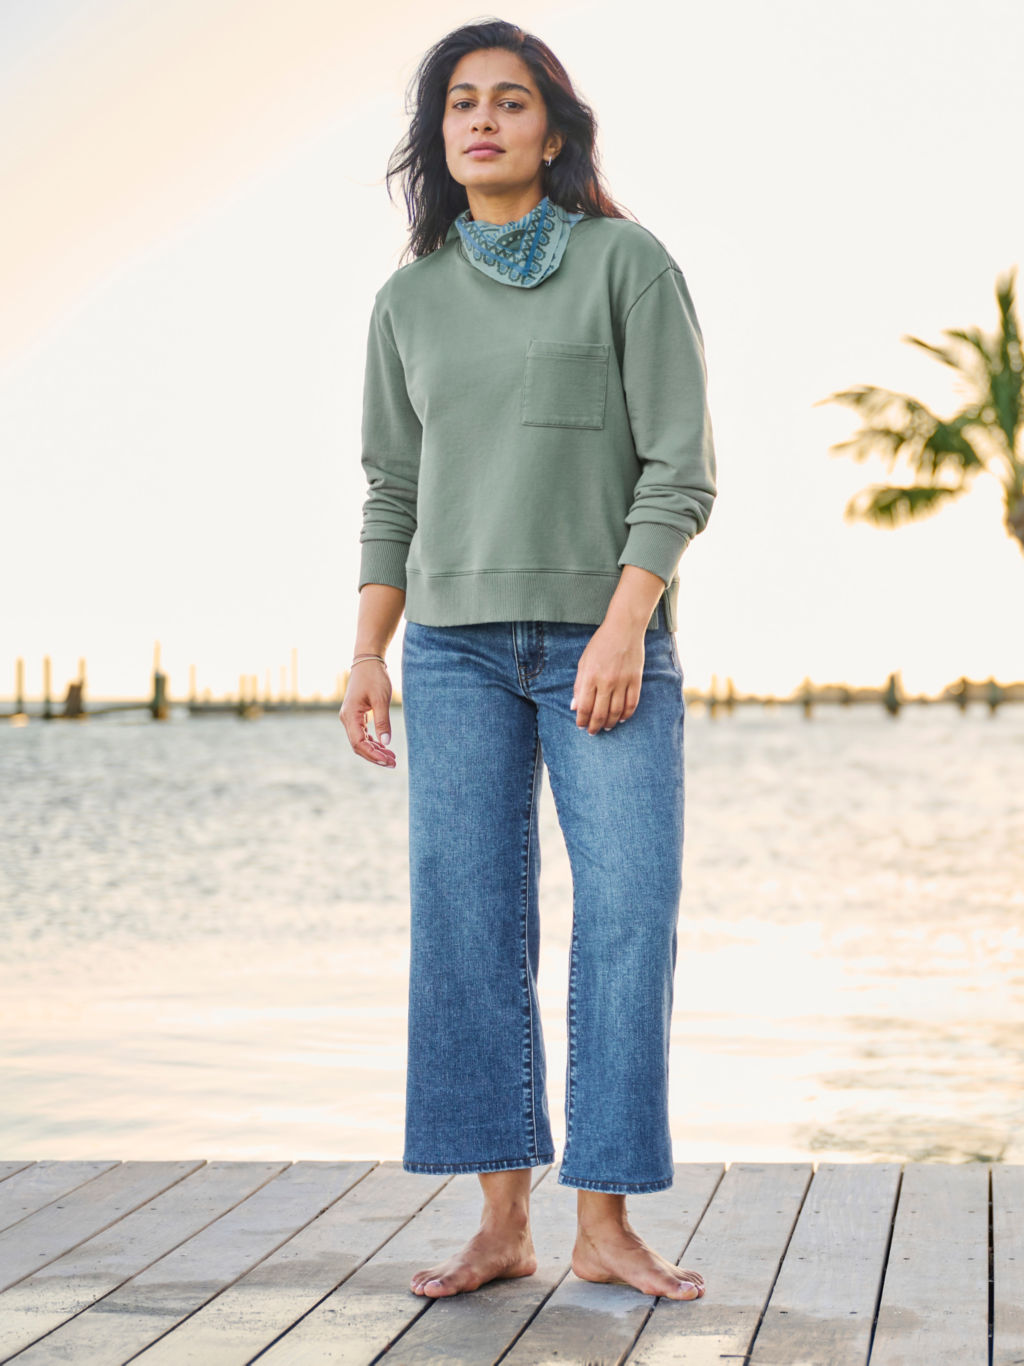 A woman wearing a sage green sweatshirt, wide leg cropped jeans, standing barefoot on a wooden dock.